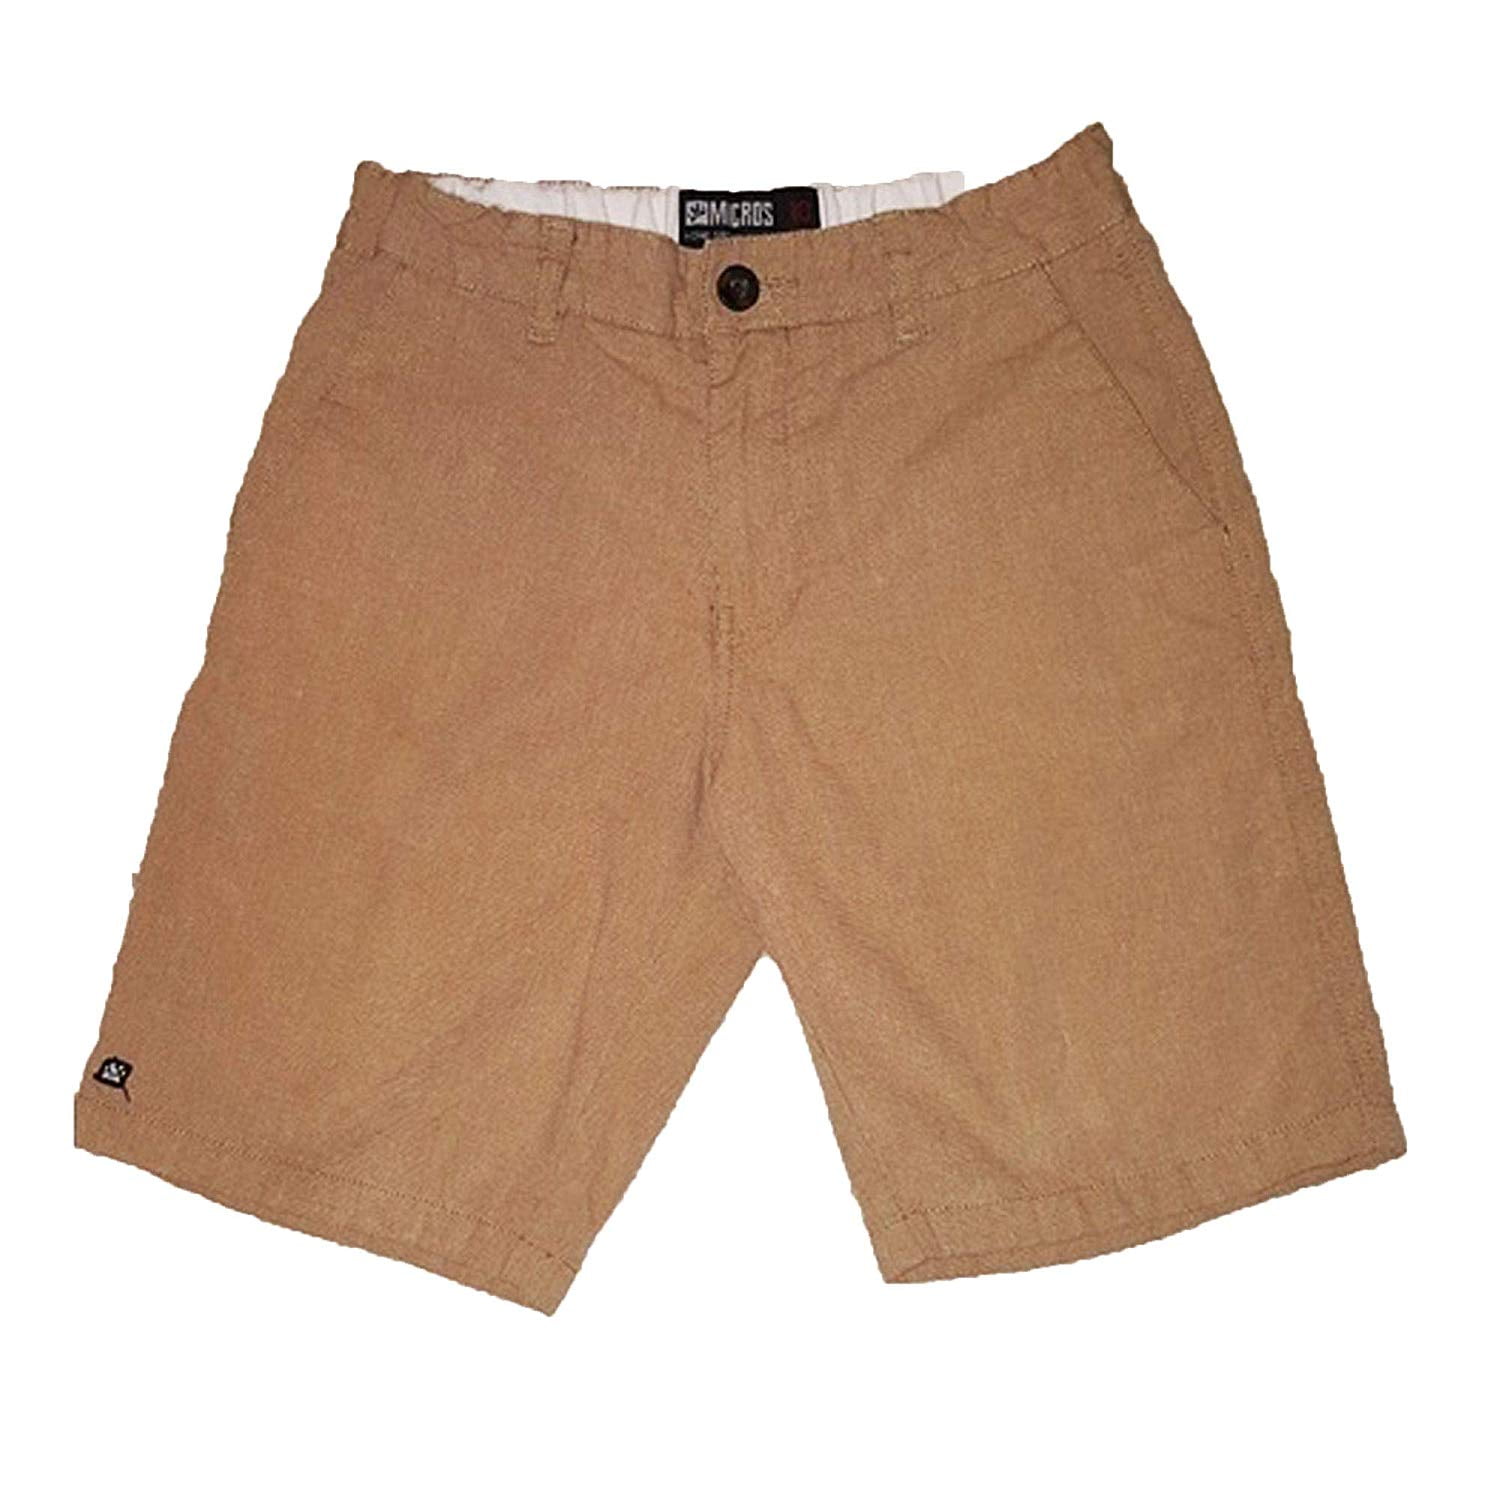 Micros Youth Boys Drawstring Shorts, Khaki, Small - Walmart.com